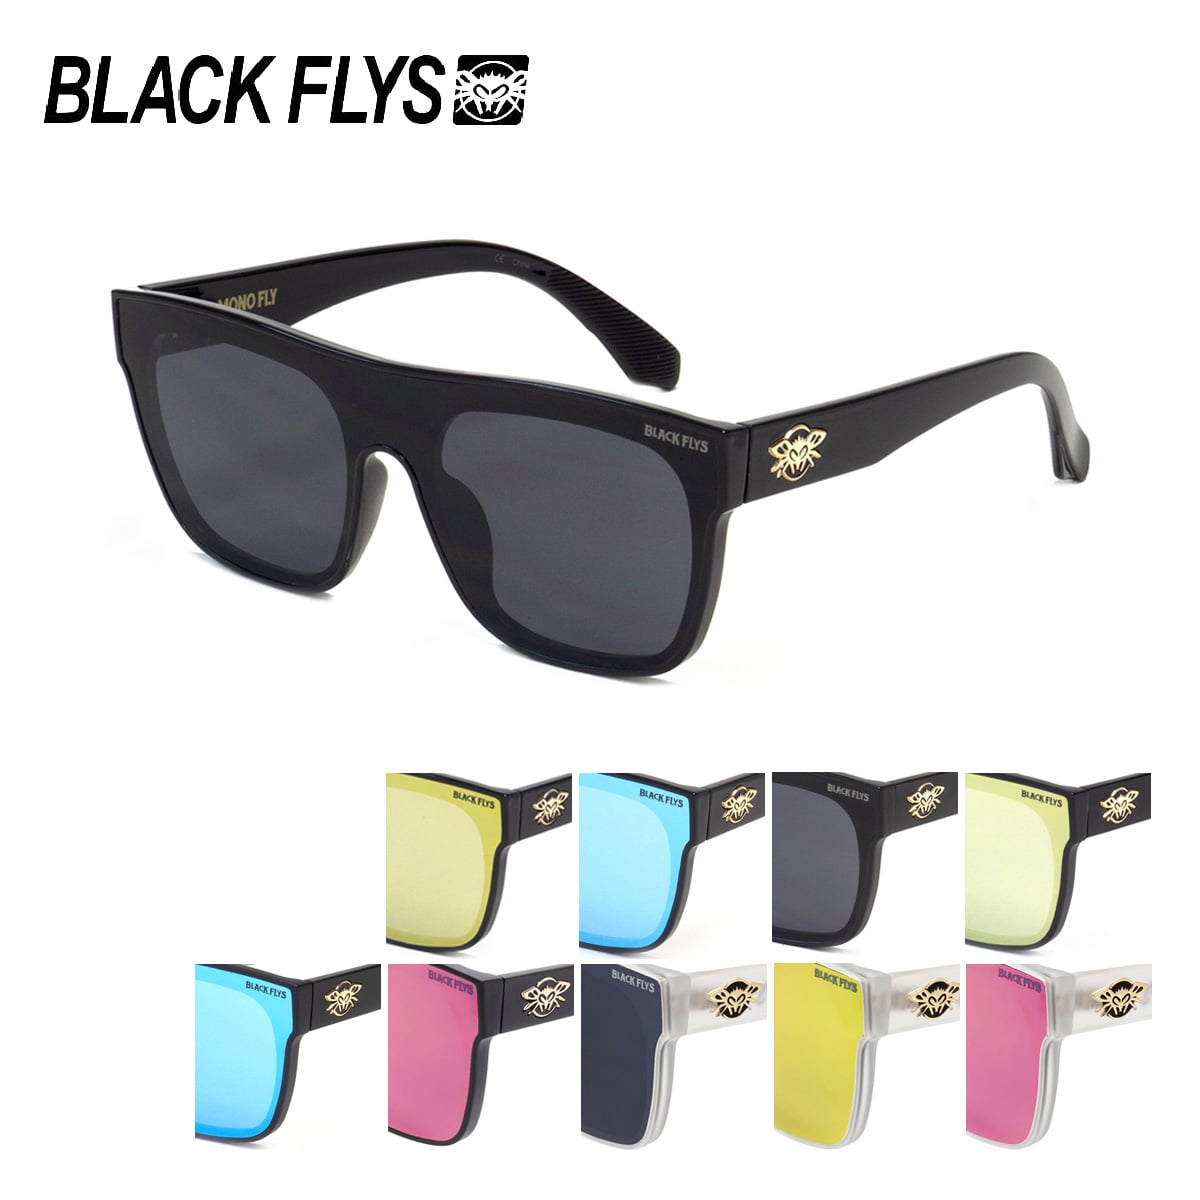 BLACKFLYS ブラックフライ サングラス MONO FLY BF-9025 モノフライ ブラックフライズ メンズ 男性 サングラス 眼の保護 UVカット 送料無料